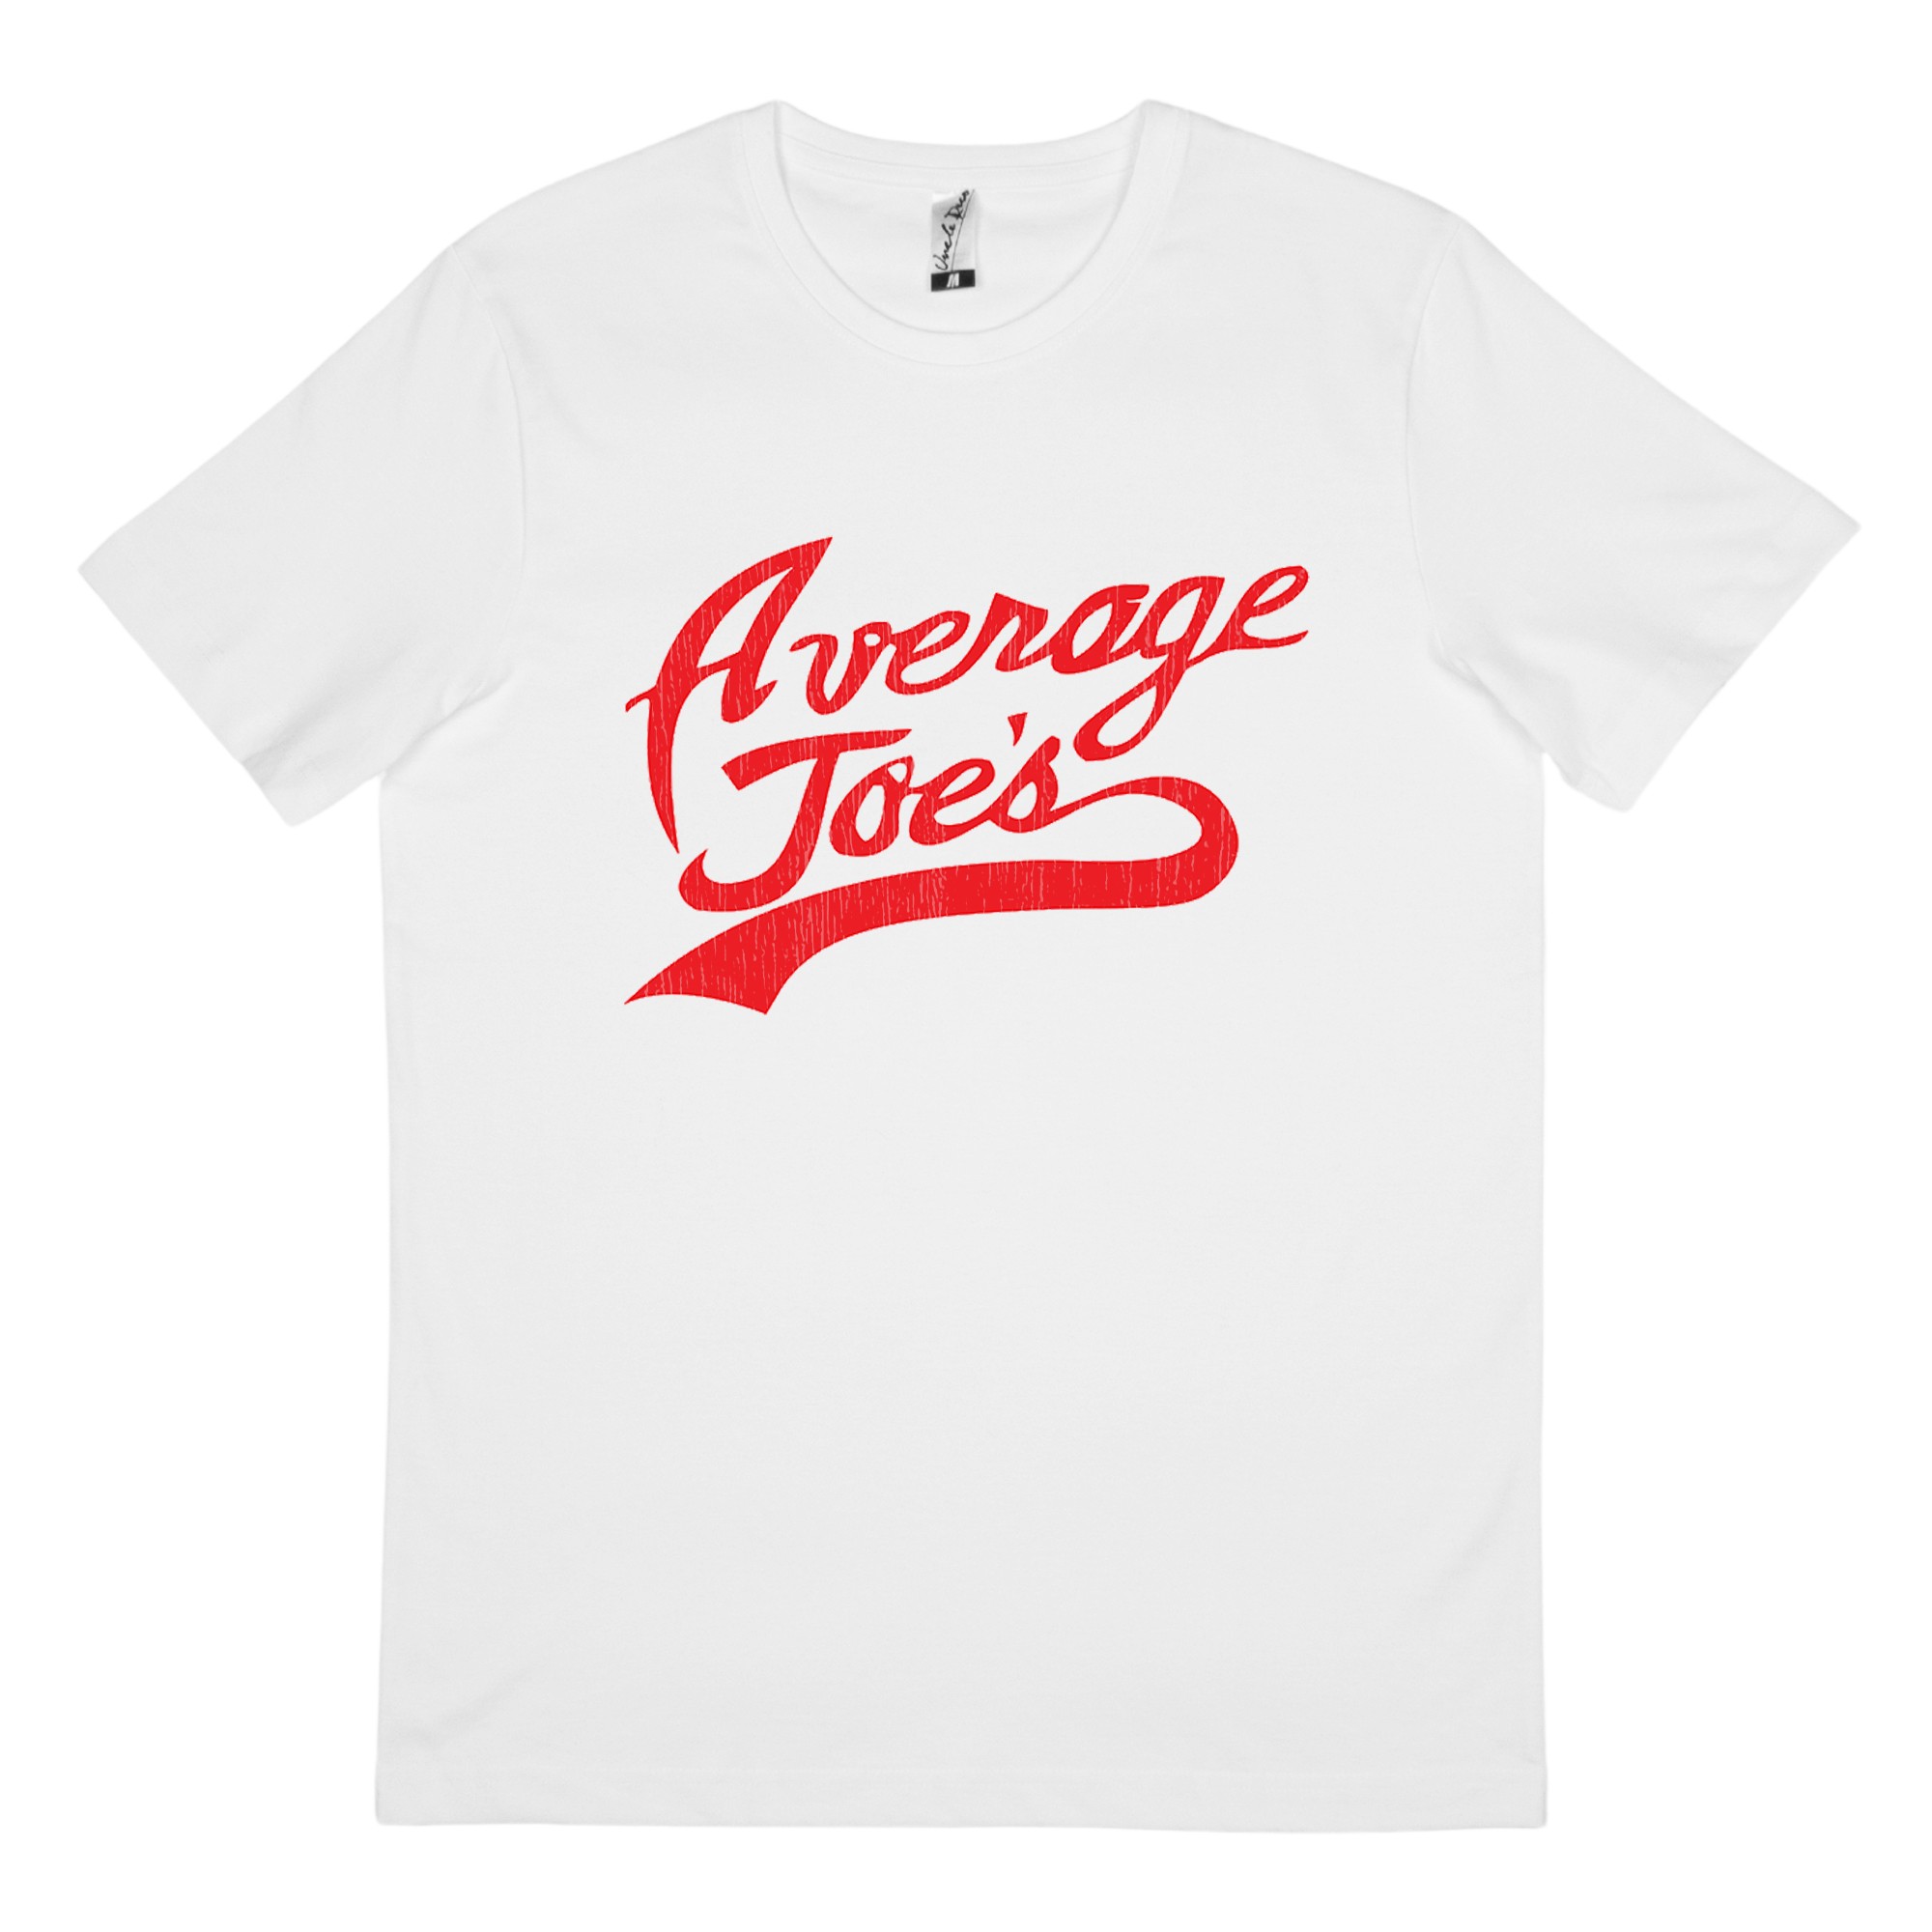 AVERAGE JOES WHITE TEE, Average Joes White T-Shirt